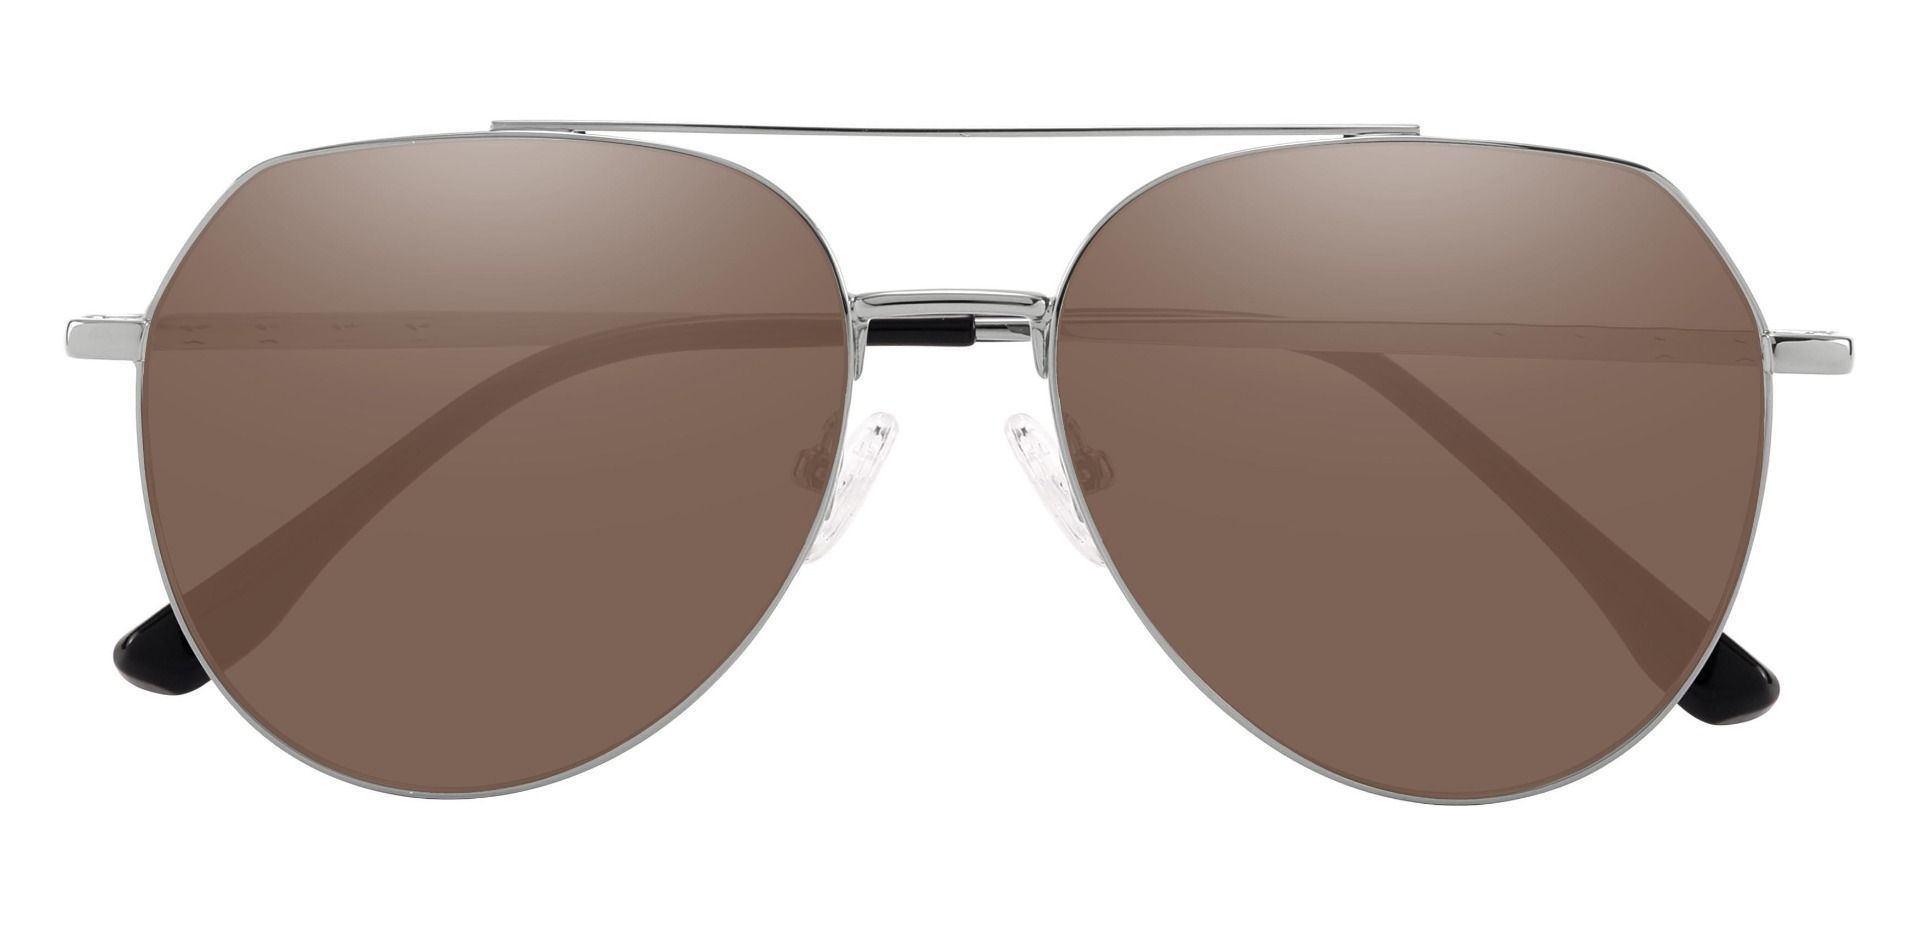 Wexford Aviator Prescription Sunglasses - Silver Frame With Brown ...